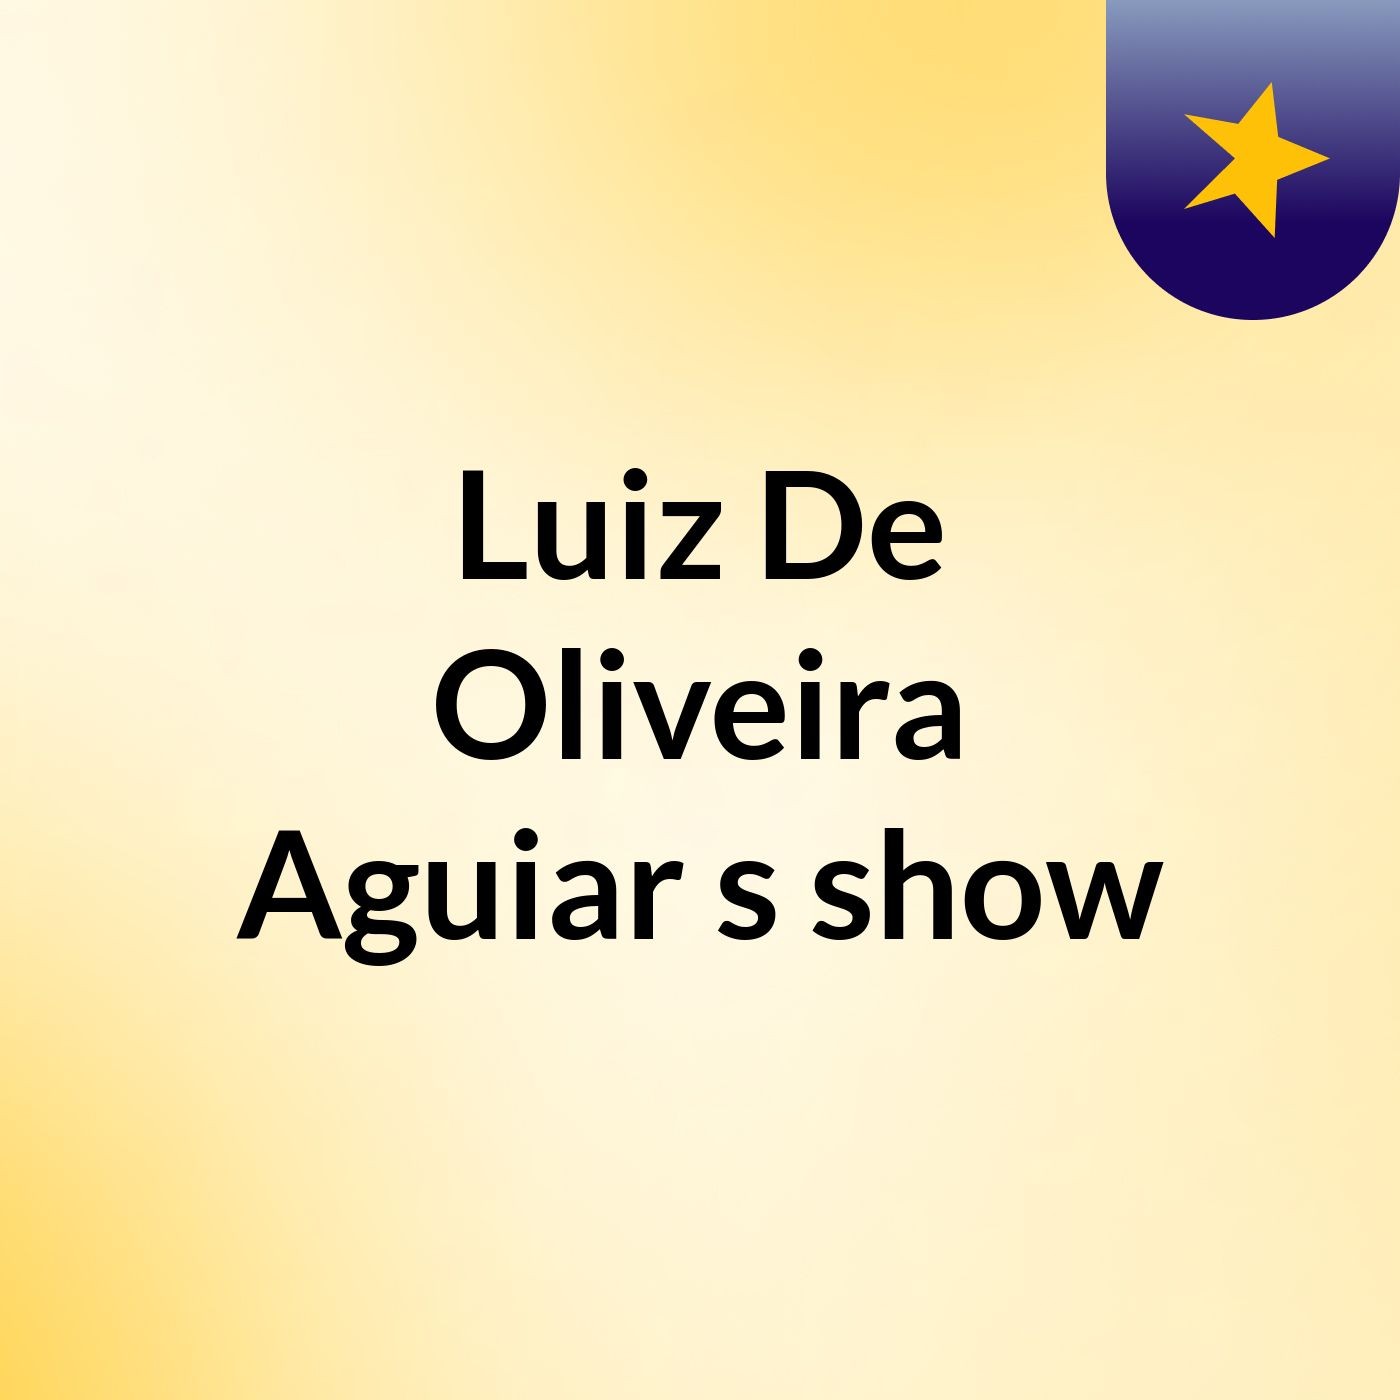 Luiz De Oliveira Aguiar's show